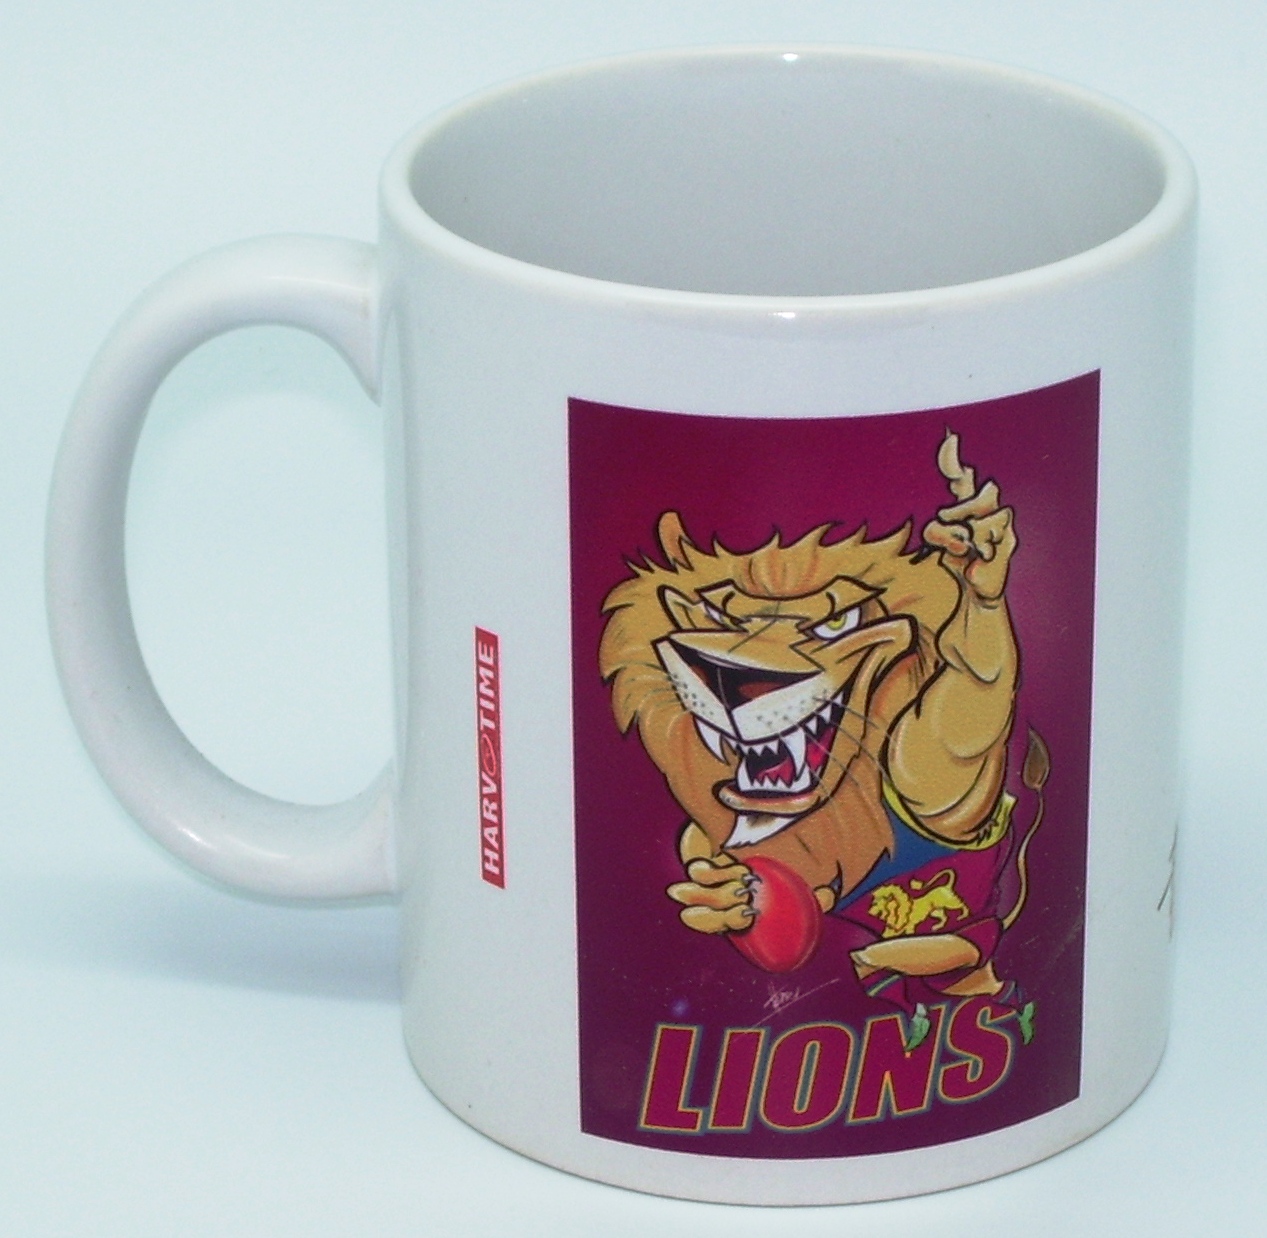 Lions Coffee Mug